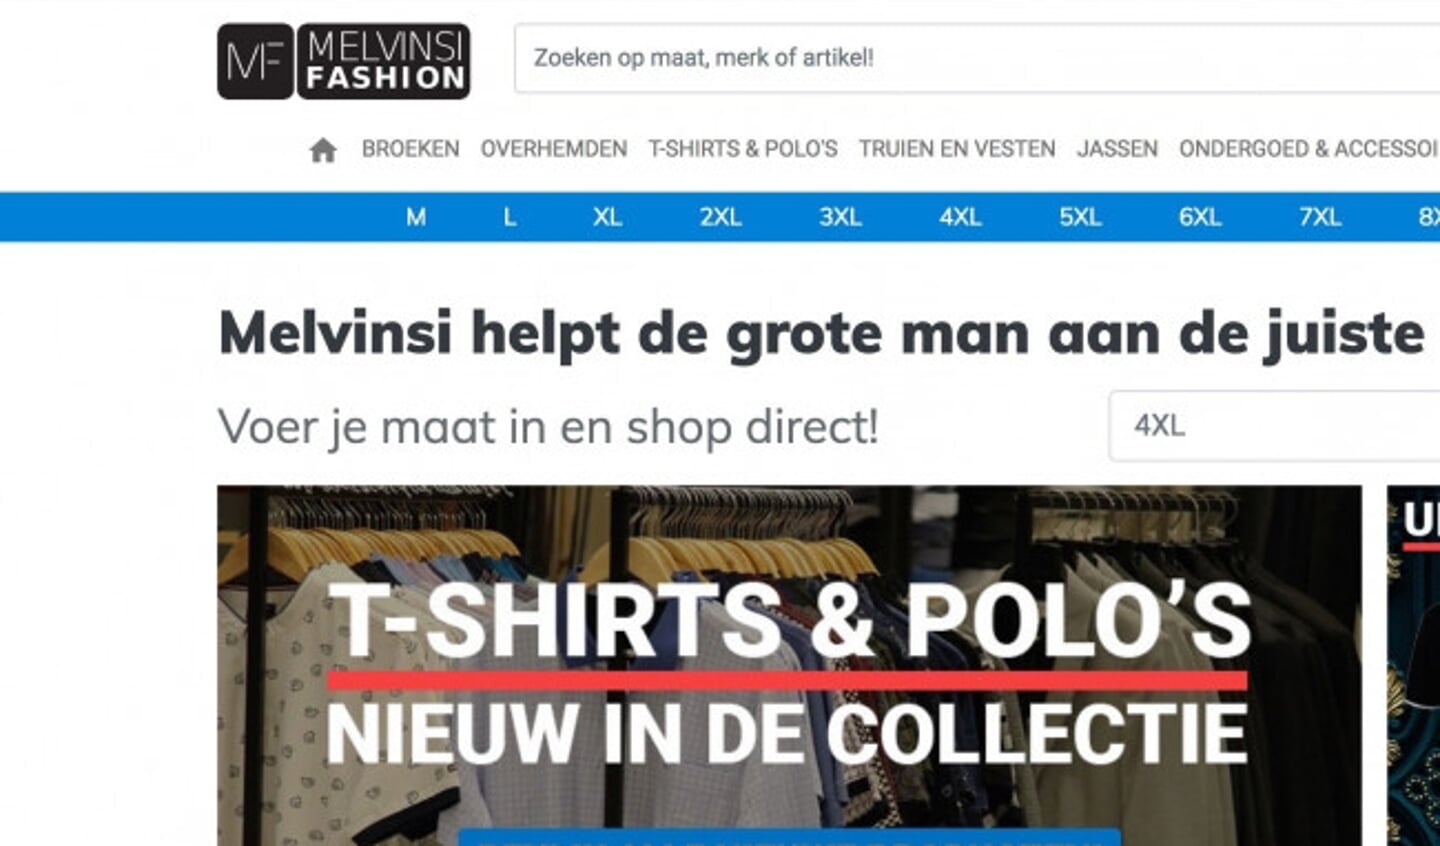  De webshop van Melvinsi Fashion.